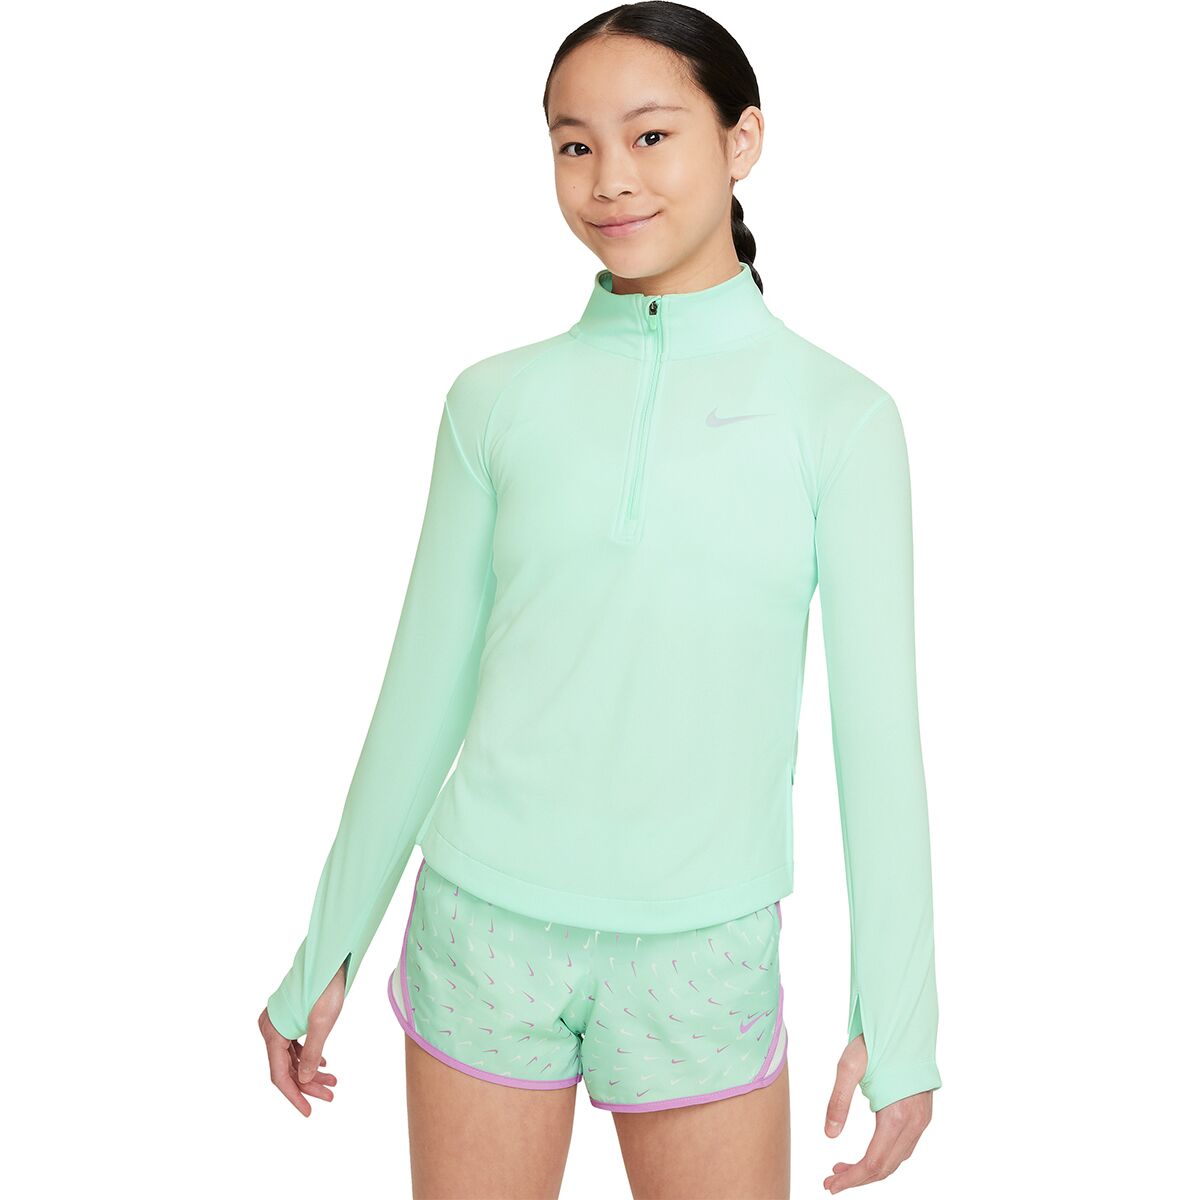 Nike - Girls Dri fit outdoor hoodie sweatshirt- Girls 5/6 years